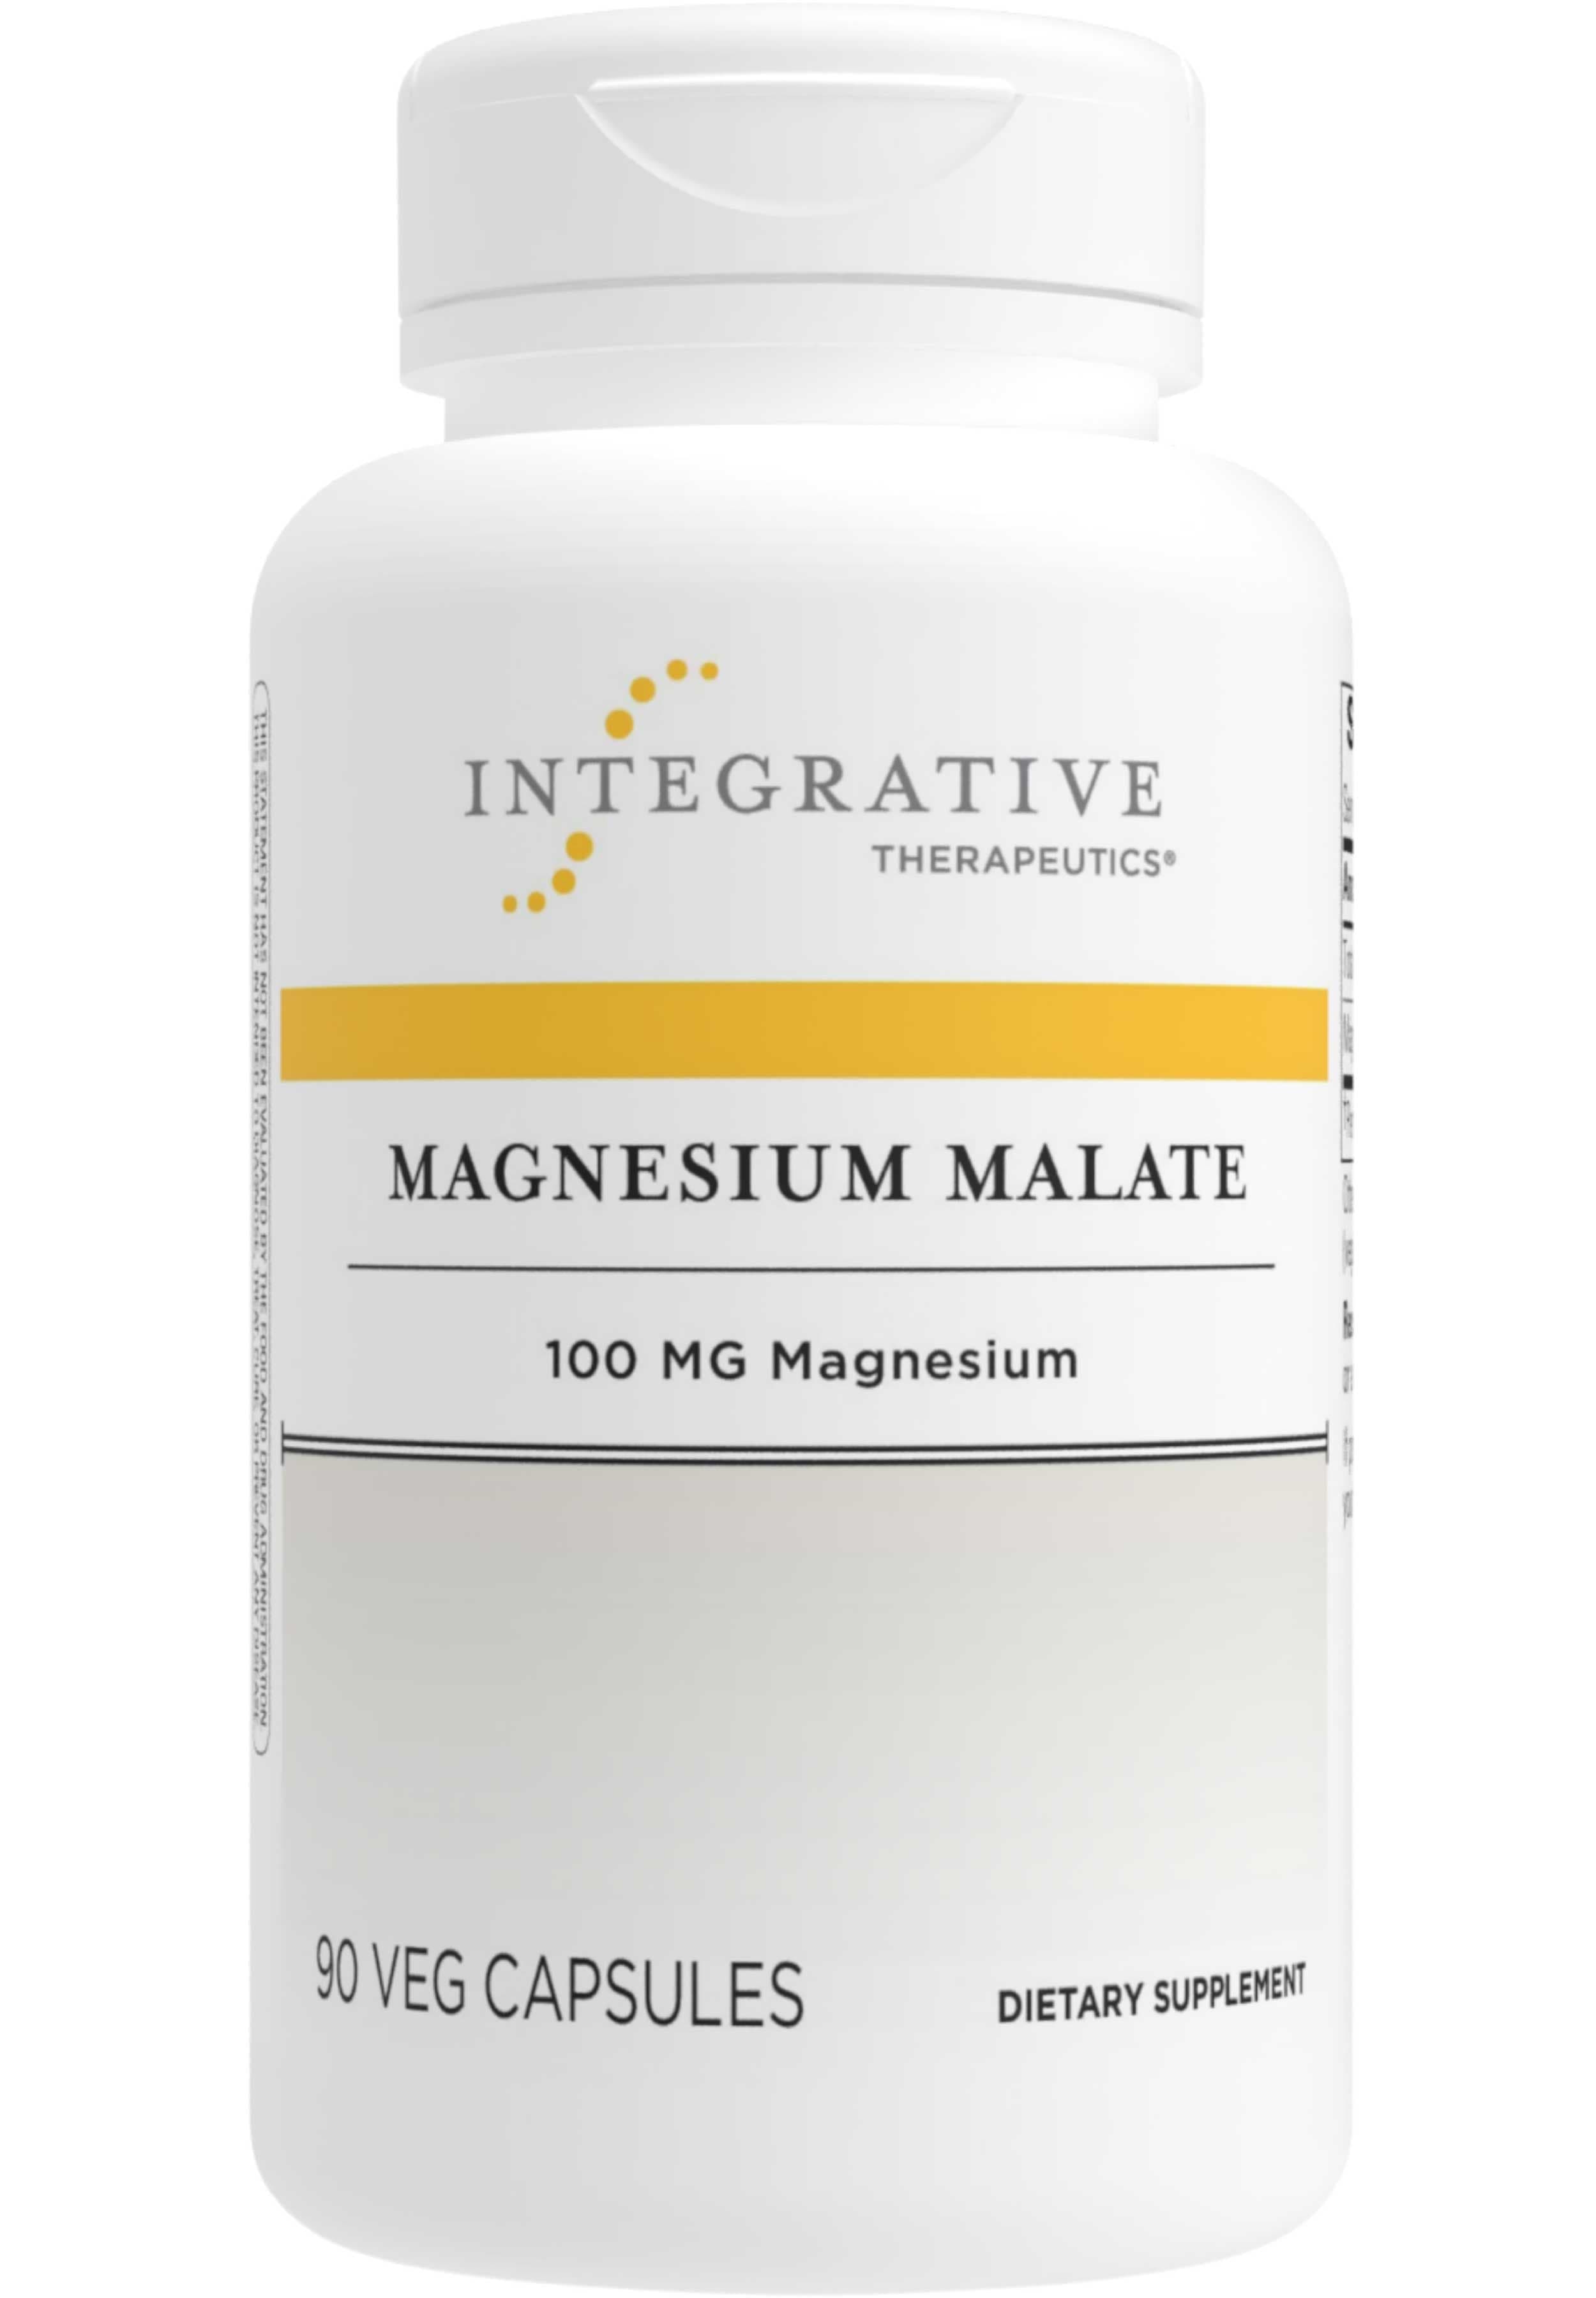 Integrative Therapeutics Magnesium Malate